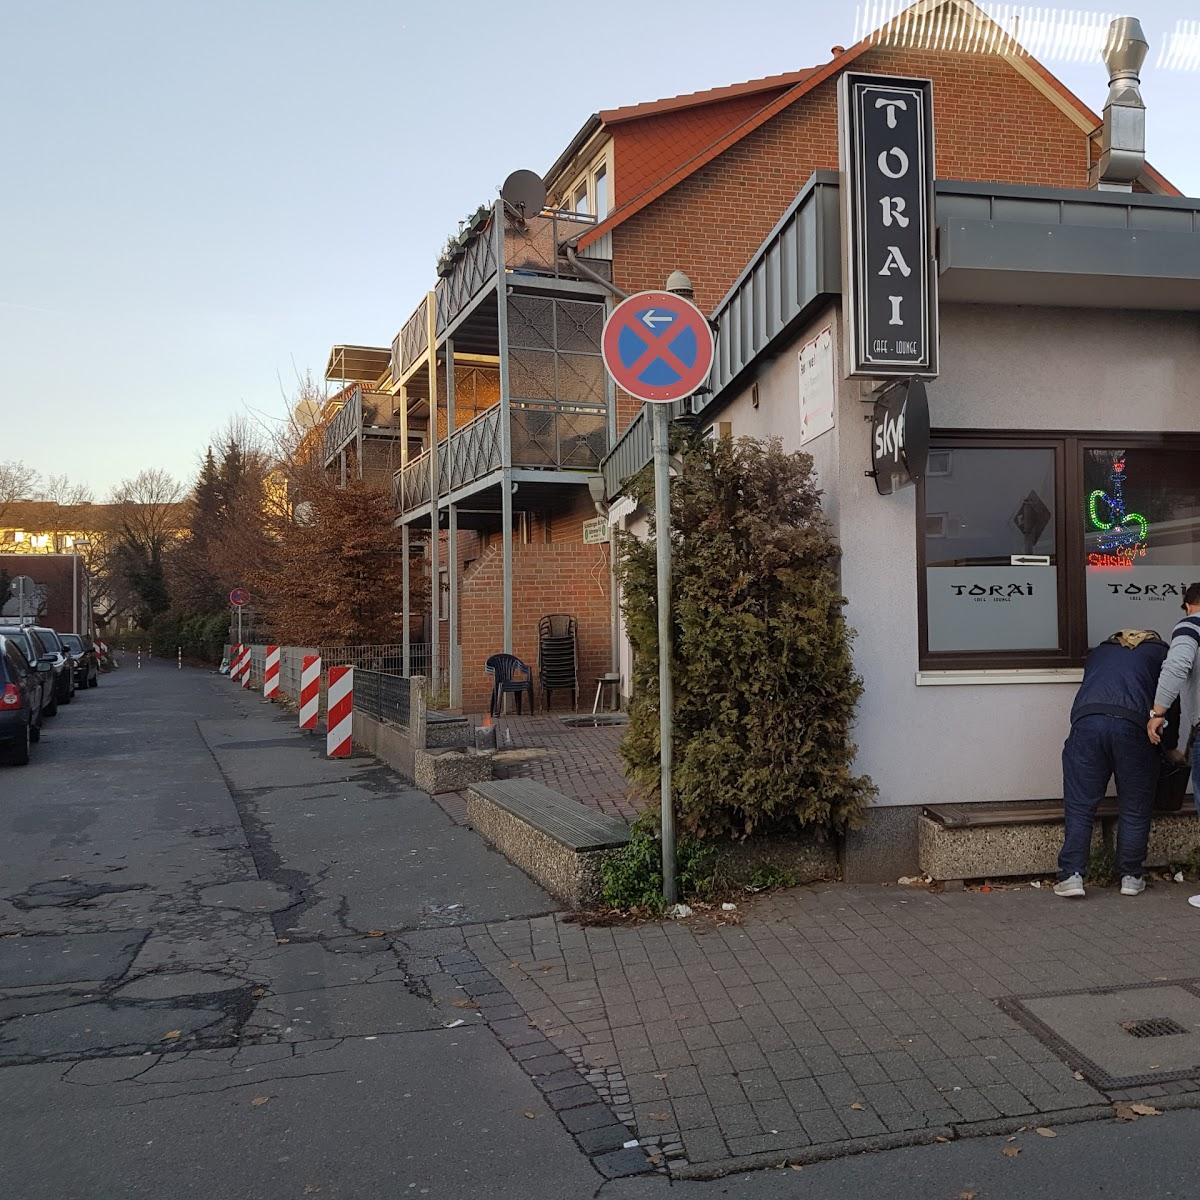 Restaurant "Torai" in Hannover